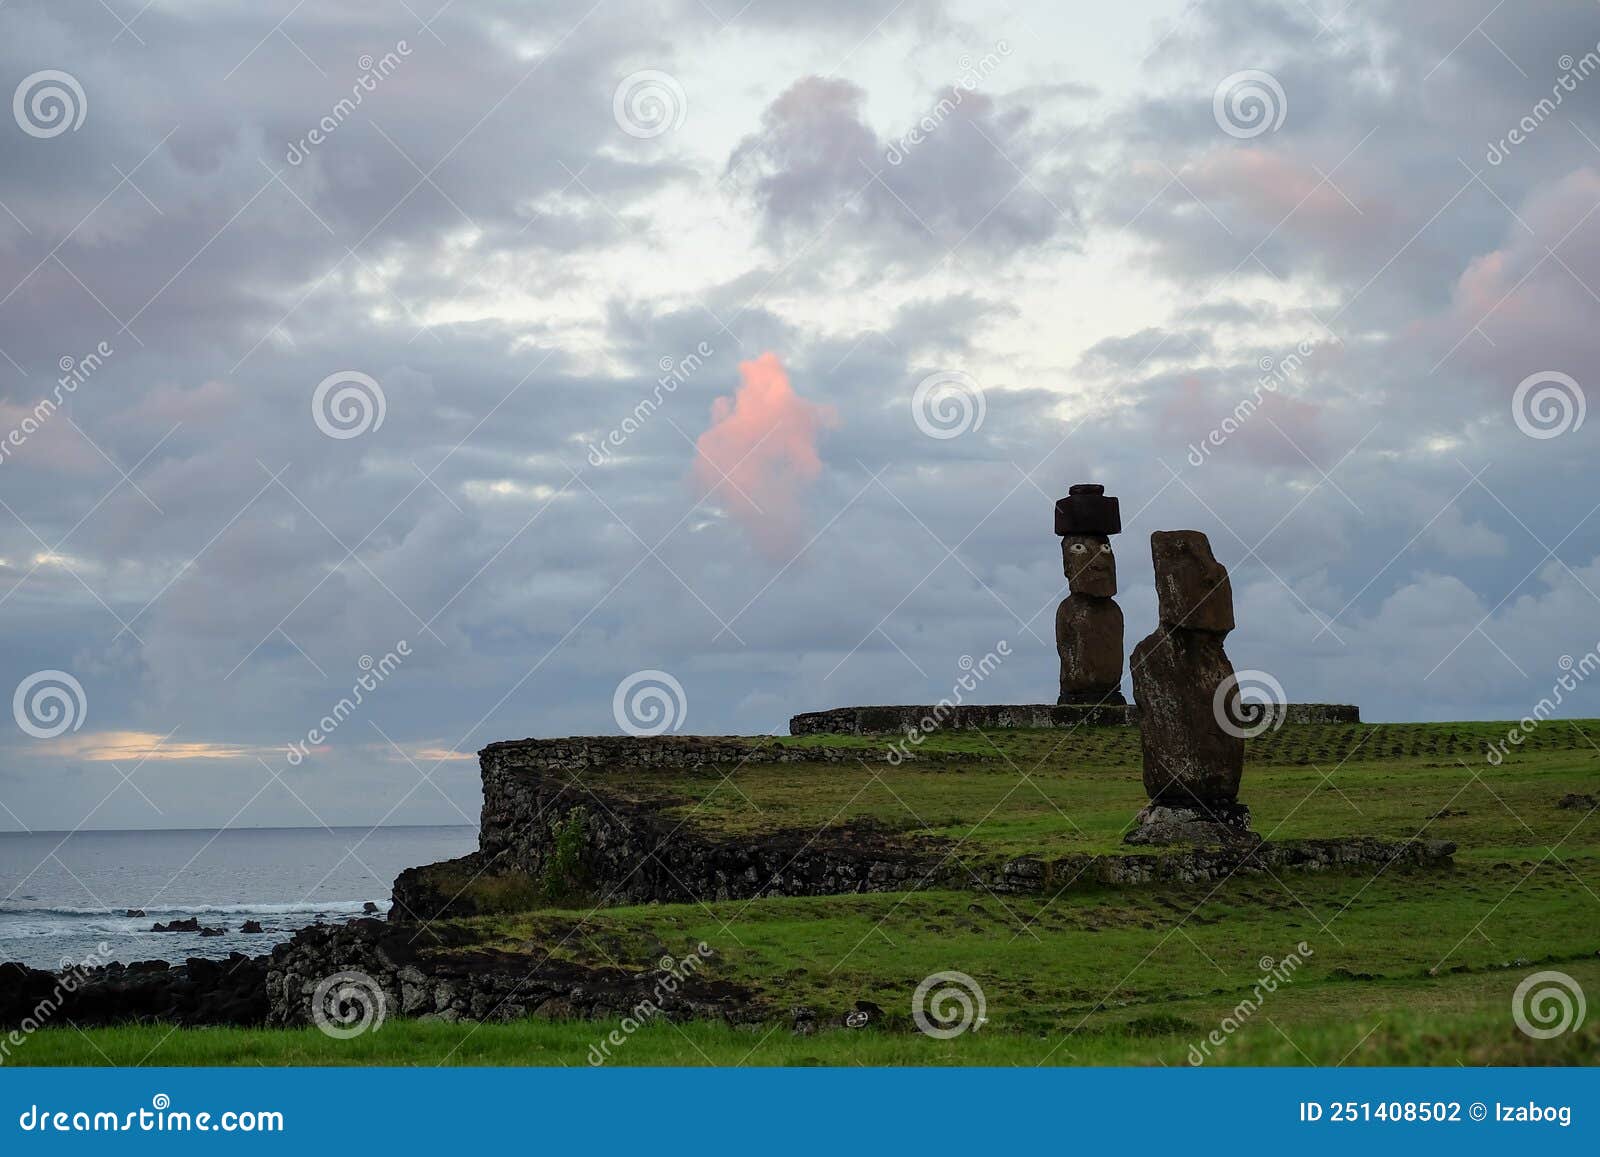 beautiful sunset over moai statues in hanga roa